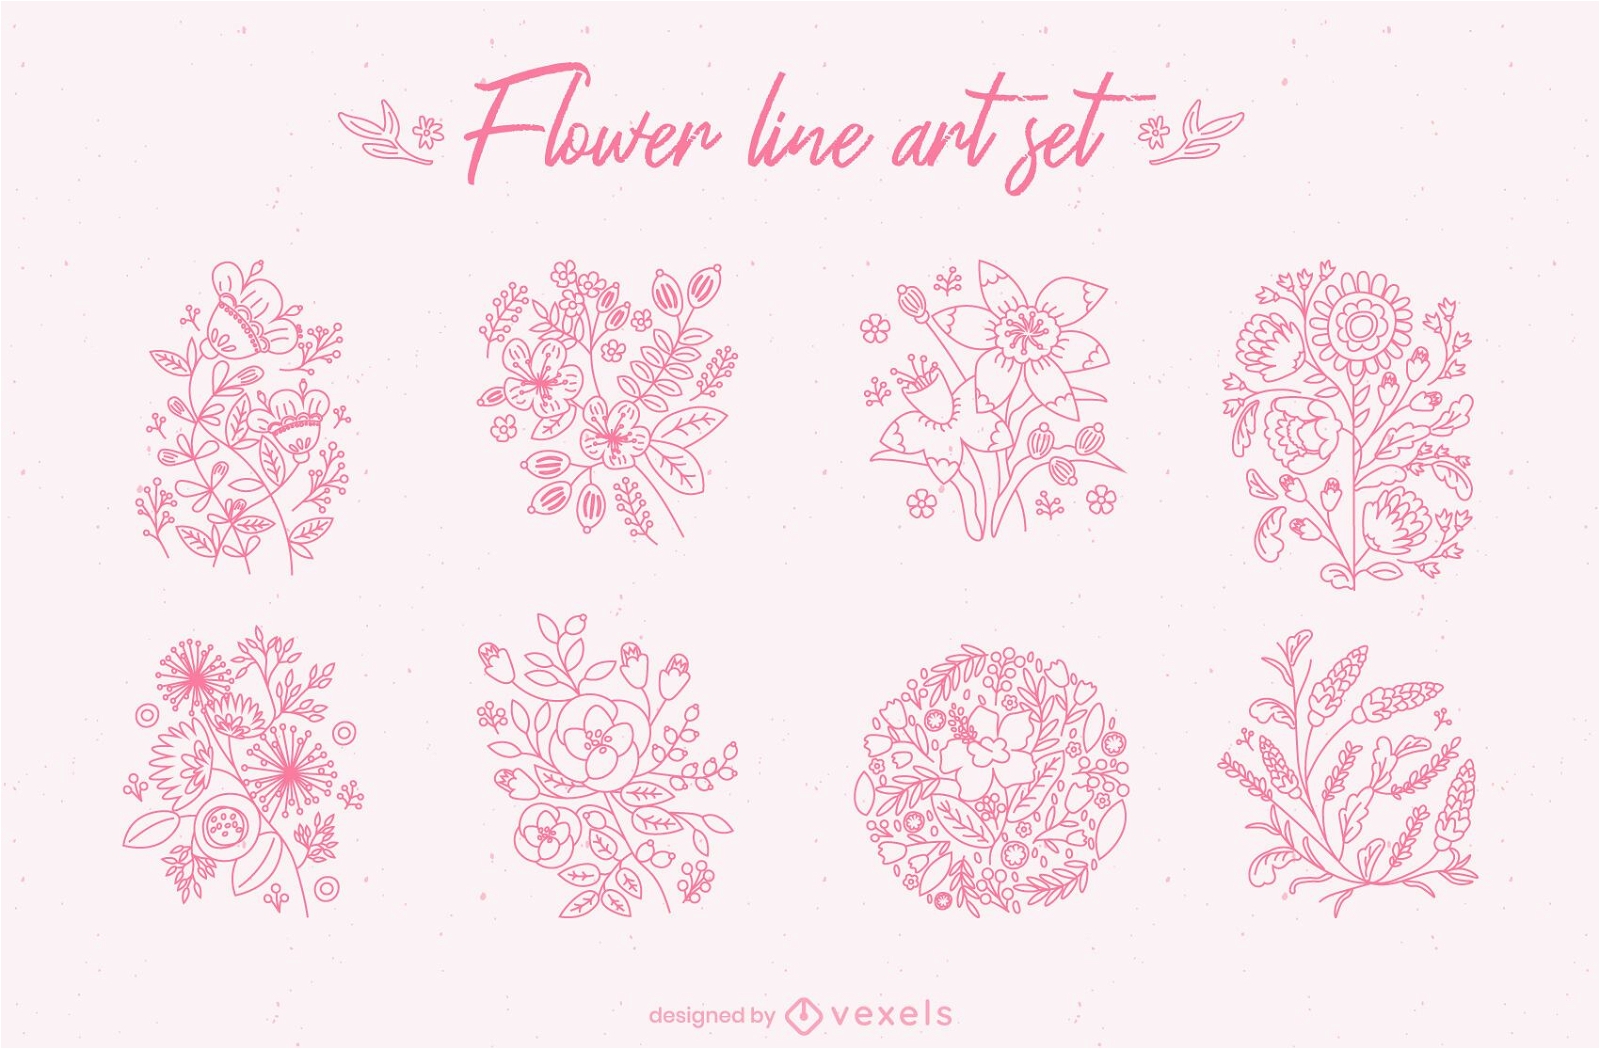 Flower line art set